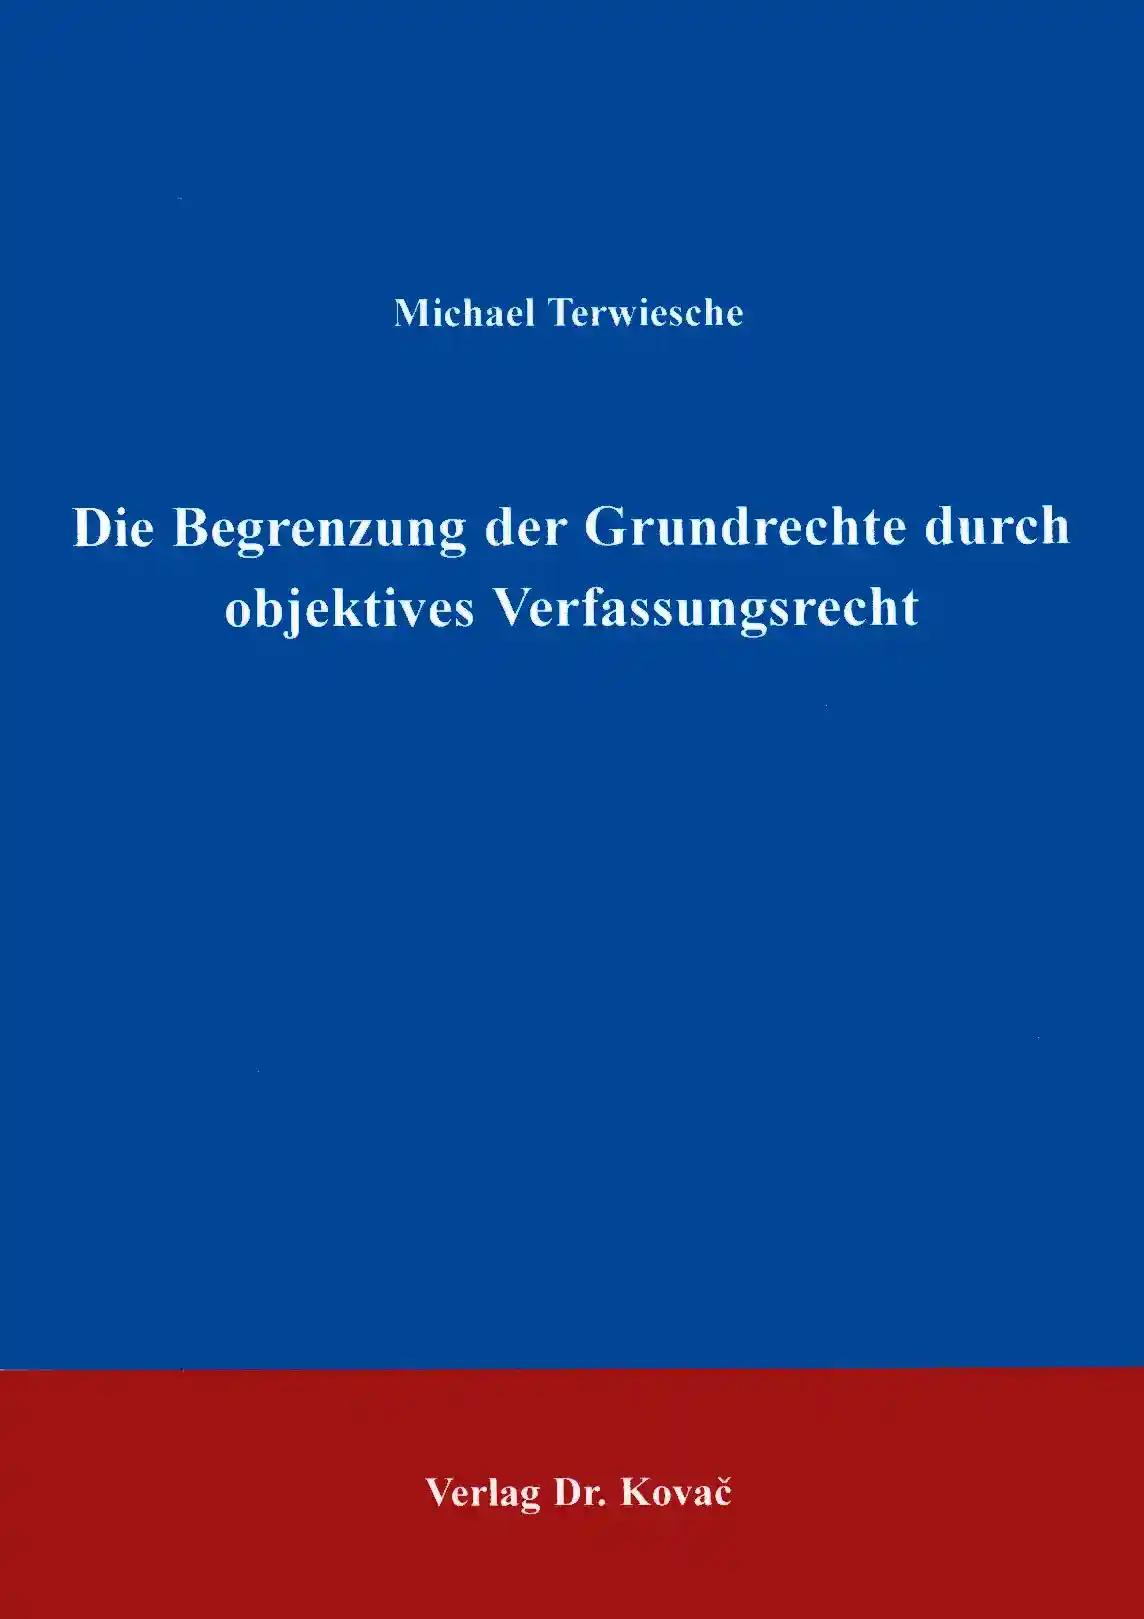 Die Begrenzung der Grundrechte durch objektives Verfassungsrecht, - Michael Terwiesche